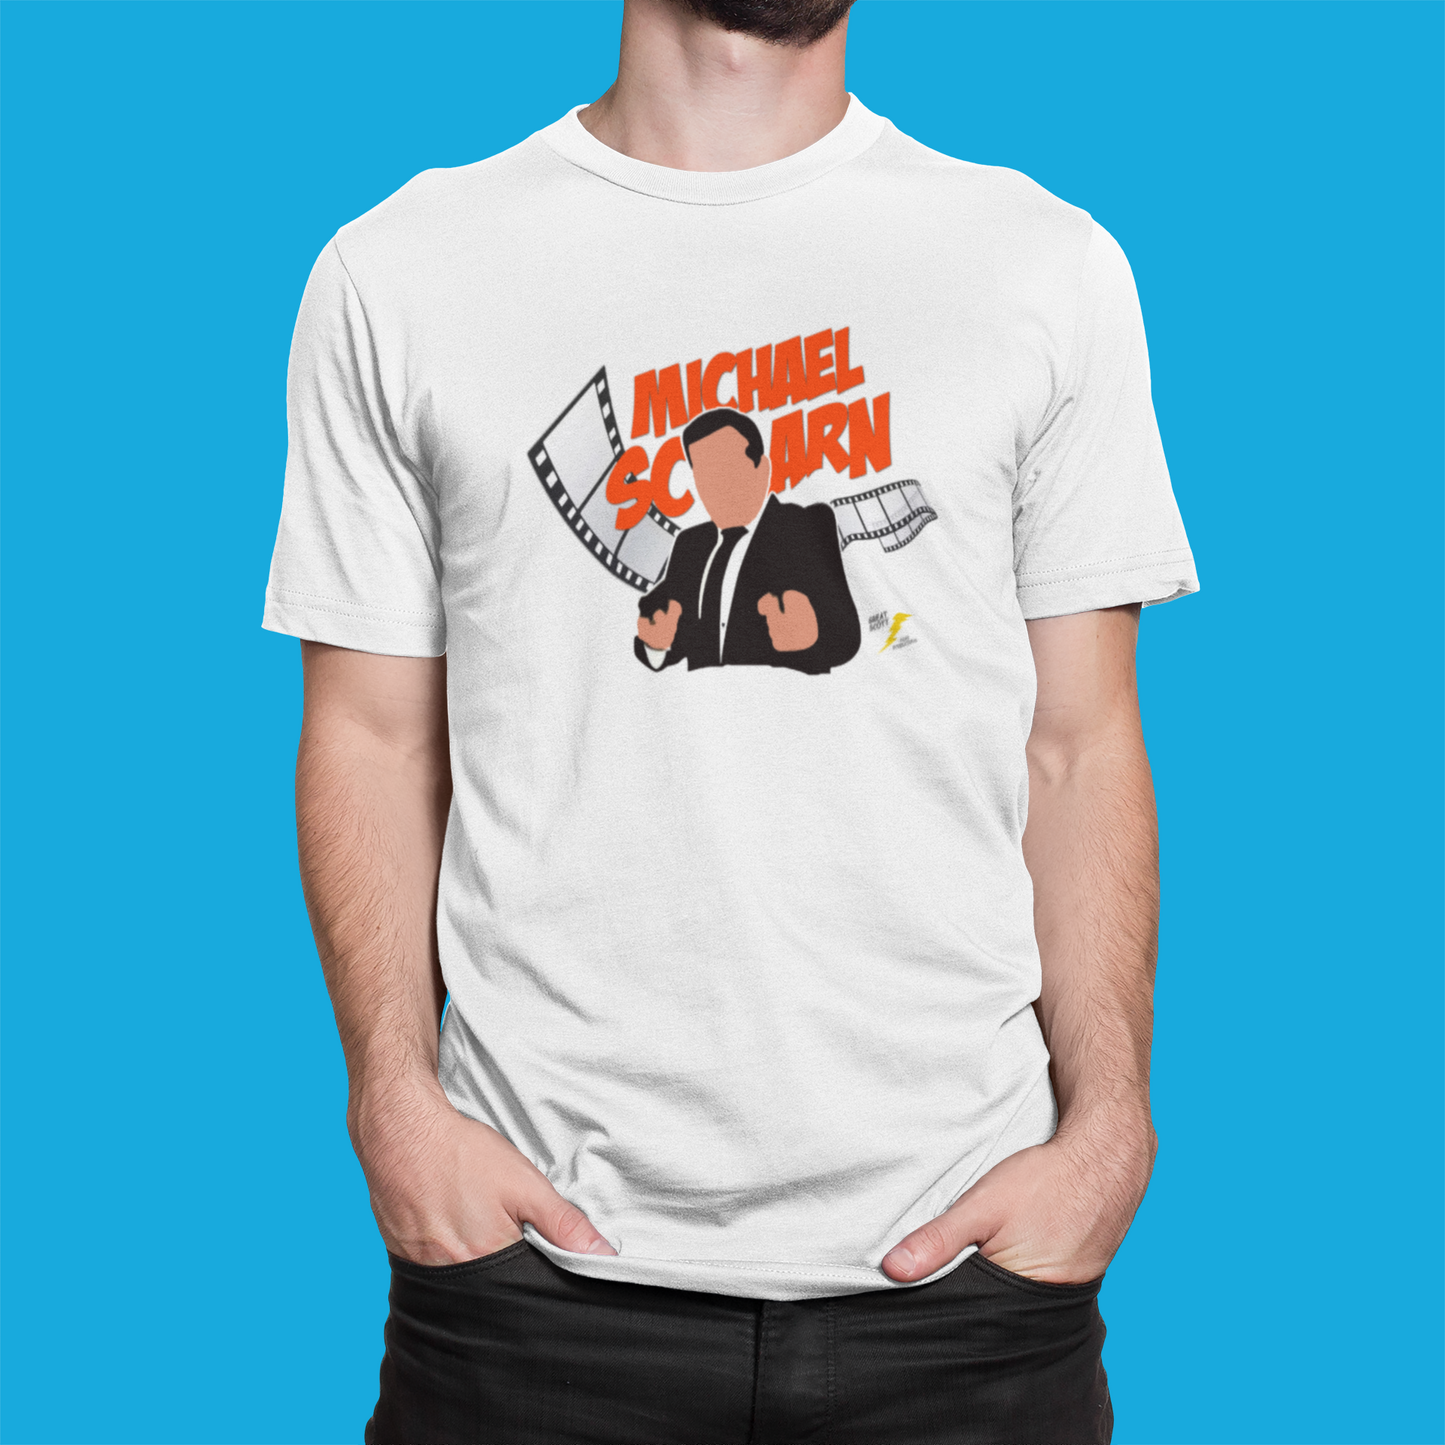 Camiseta "Michael Scarn" - The Office - Séries de TV